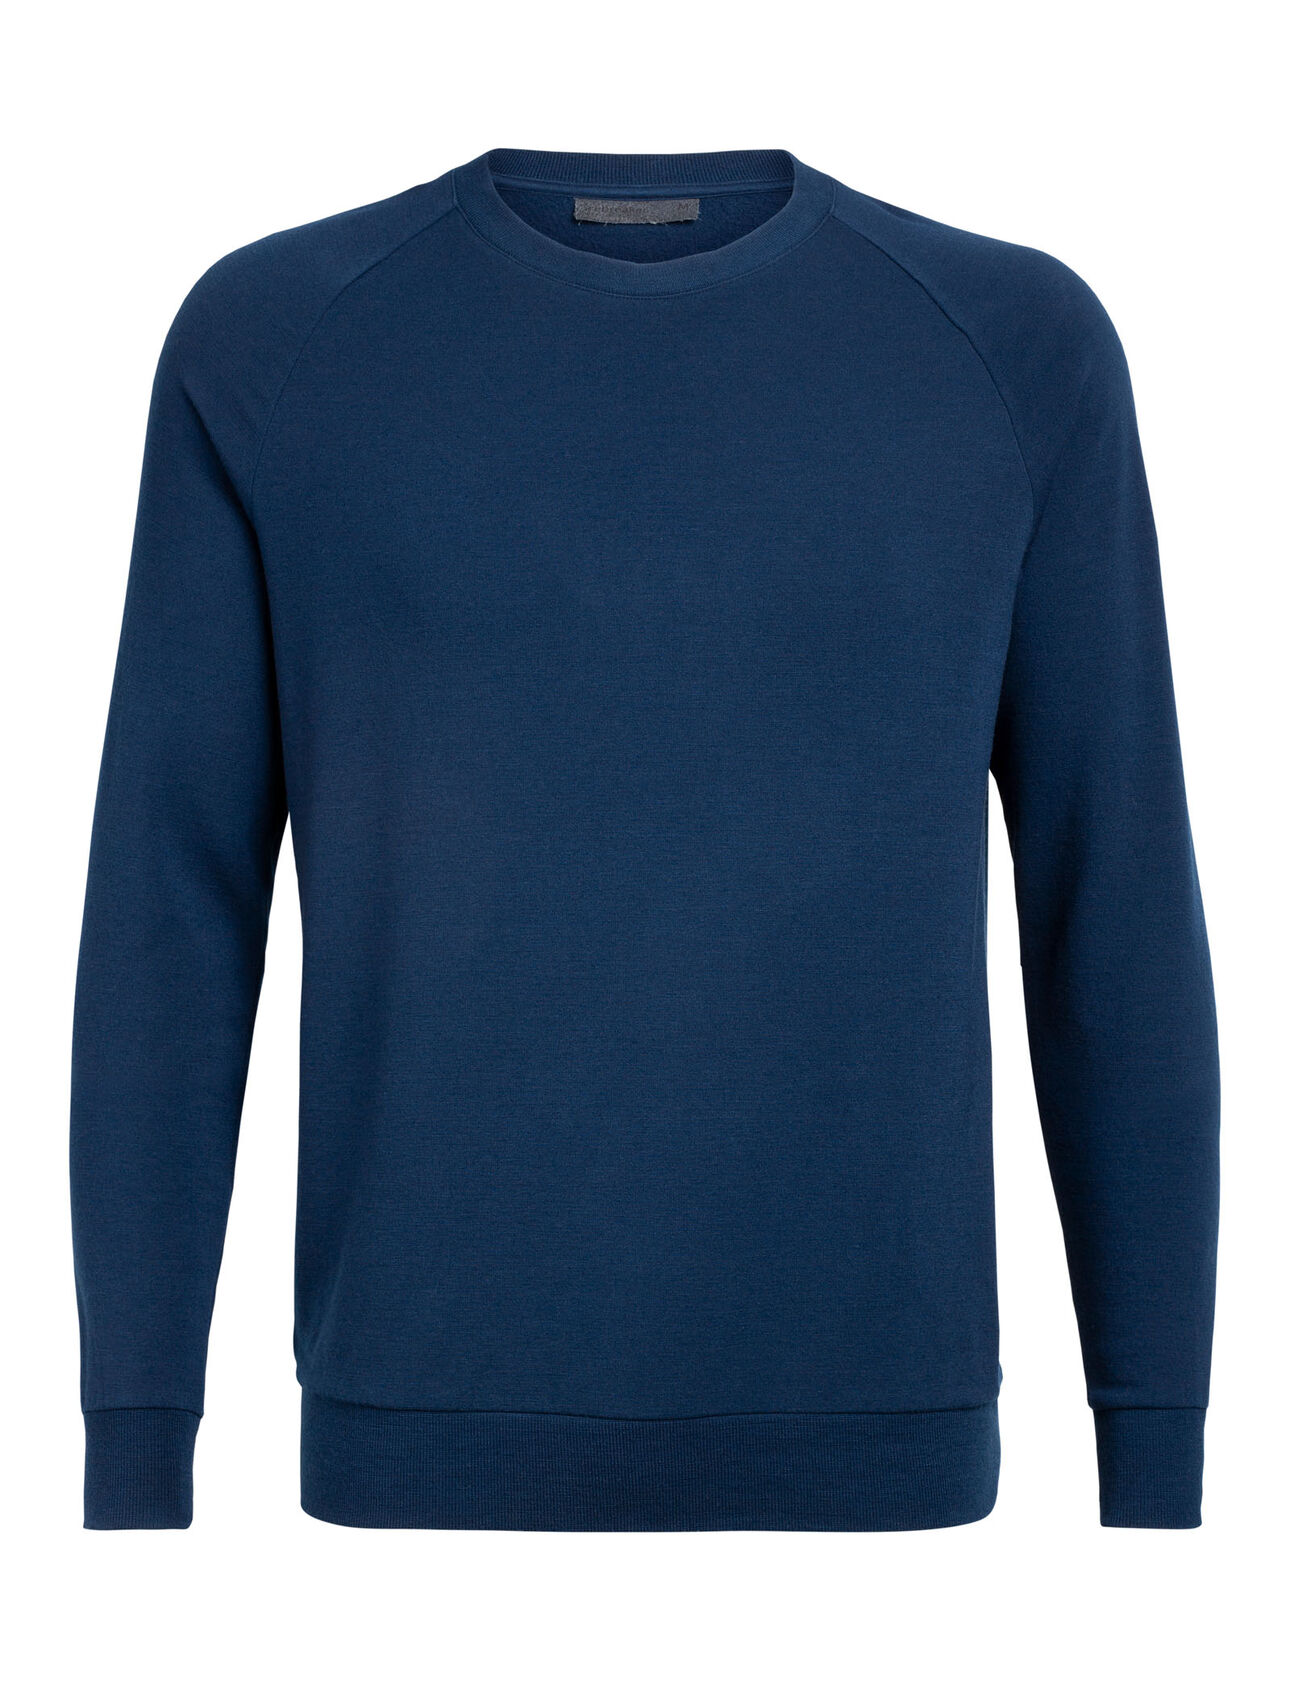 Merino Nature Dye Helliers Long Sleeve Crewe Sweatshirt